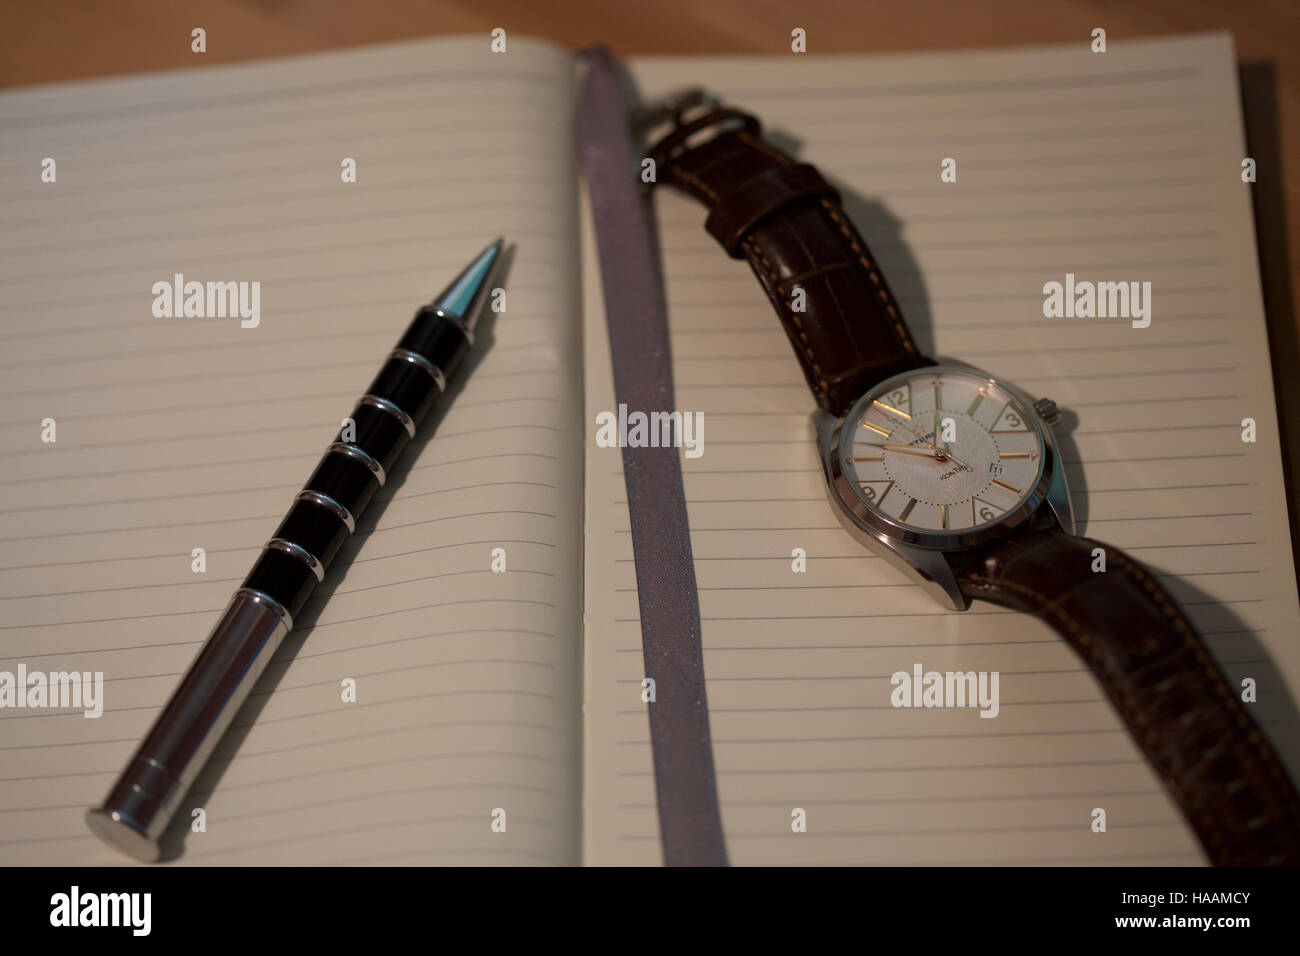 Limpiar la agenda con la pluma y el reloj de pulsera Foto de stock